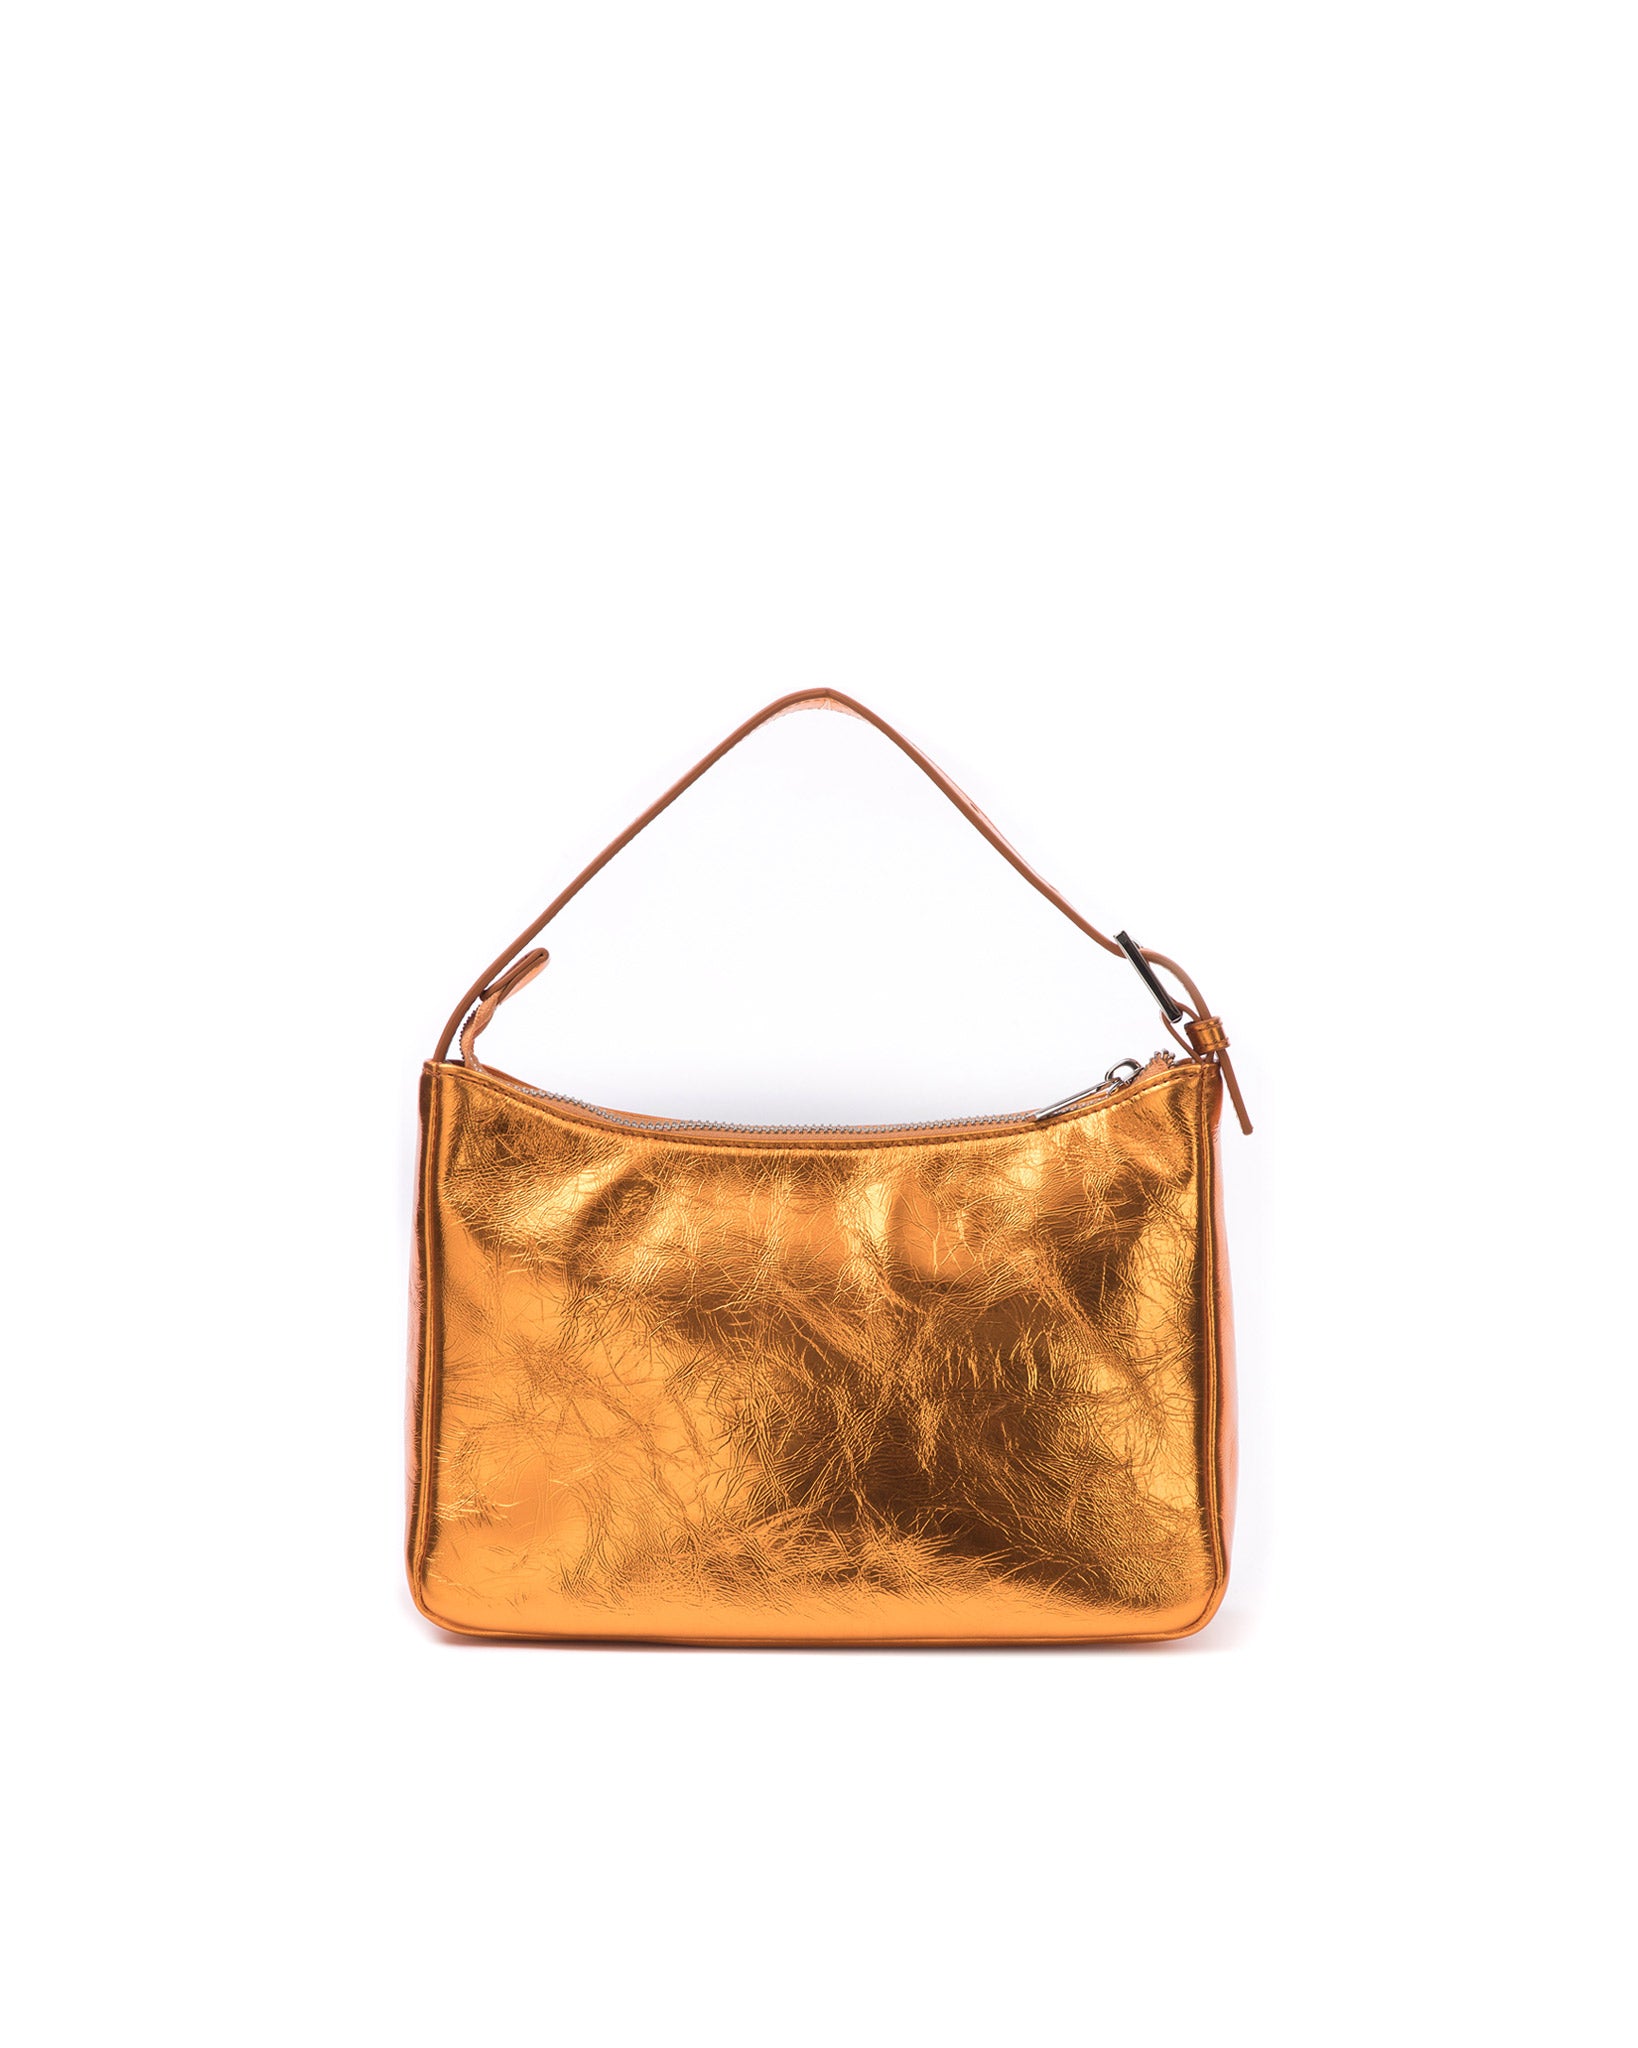 Brandon Blackwood New York - Cortni Bag - Cracked Metallic Orange Leather